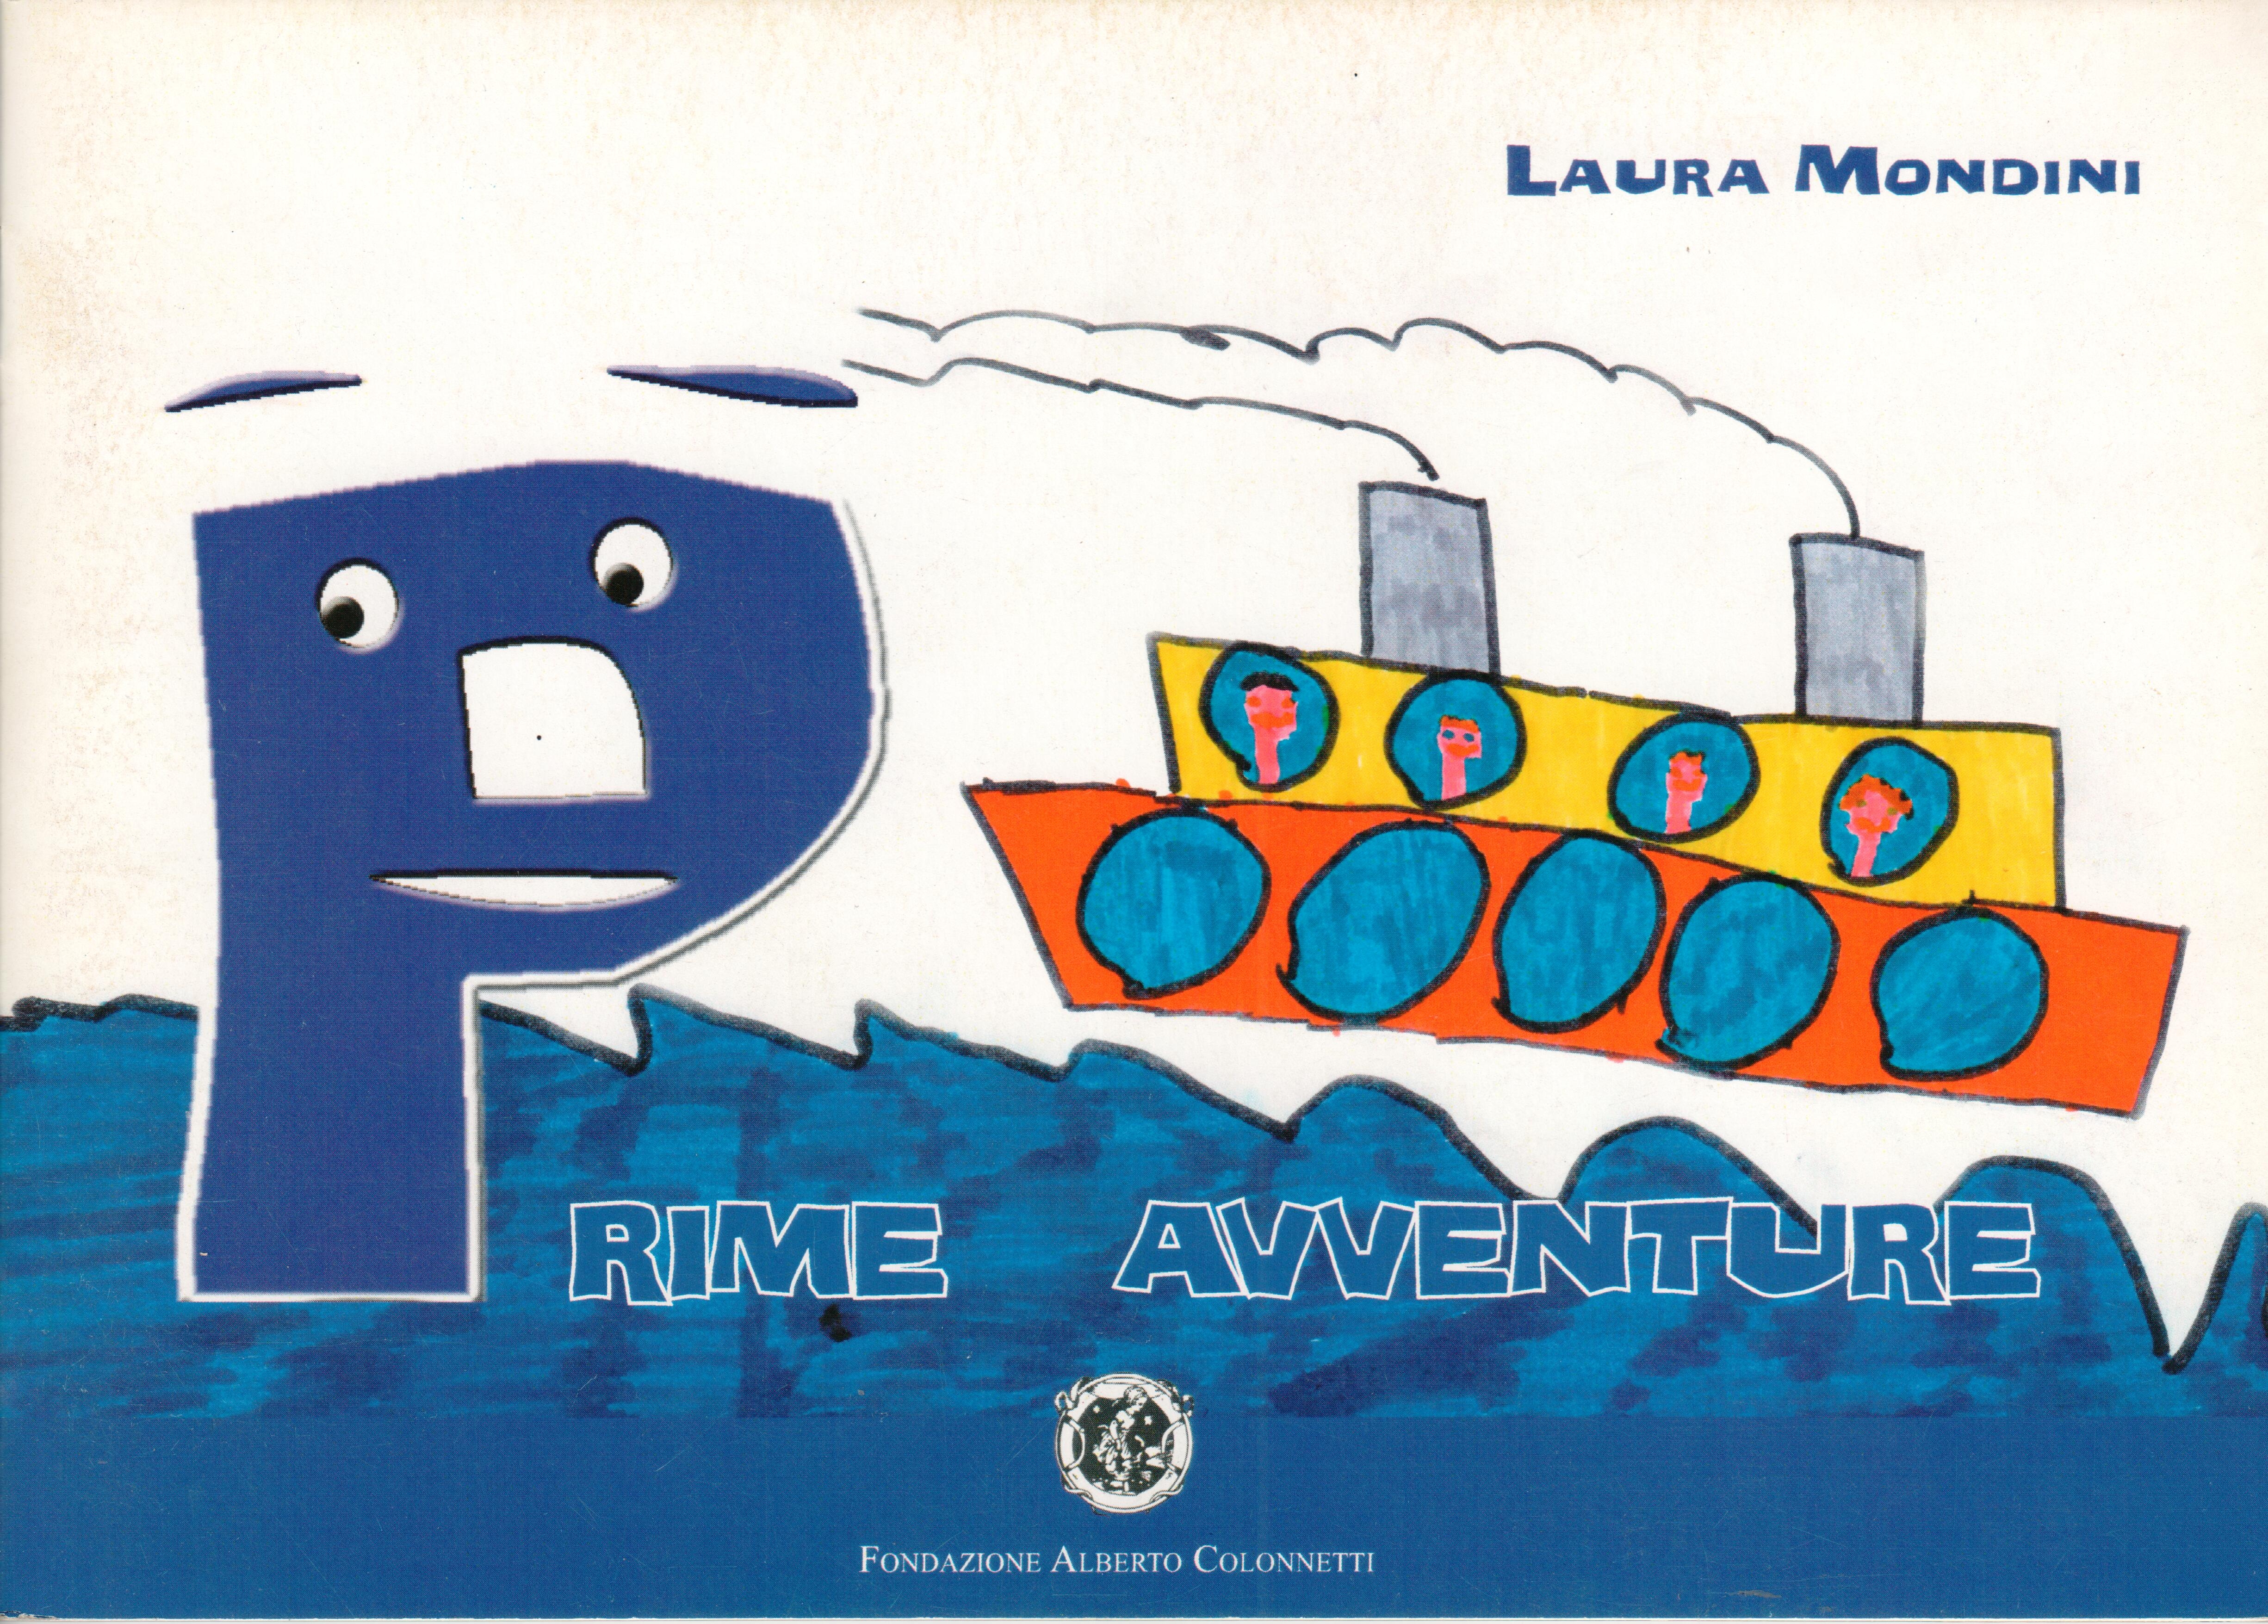 Prime avventure – Laura Mondini